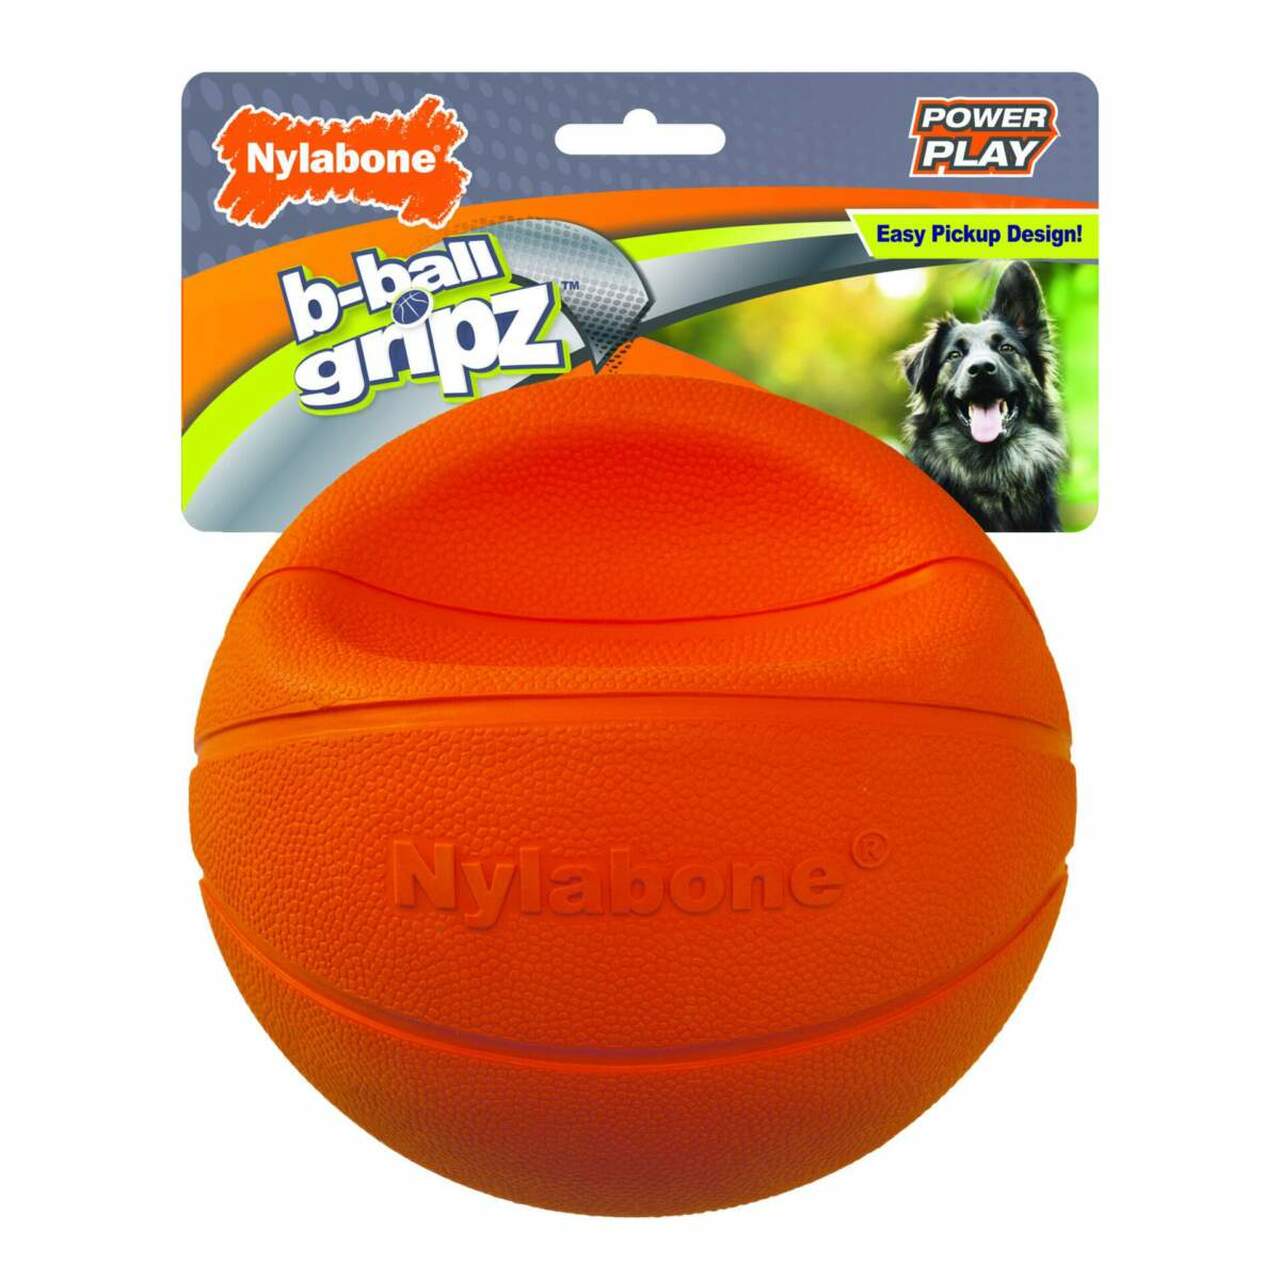 Nylabone - Basketball Gripz